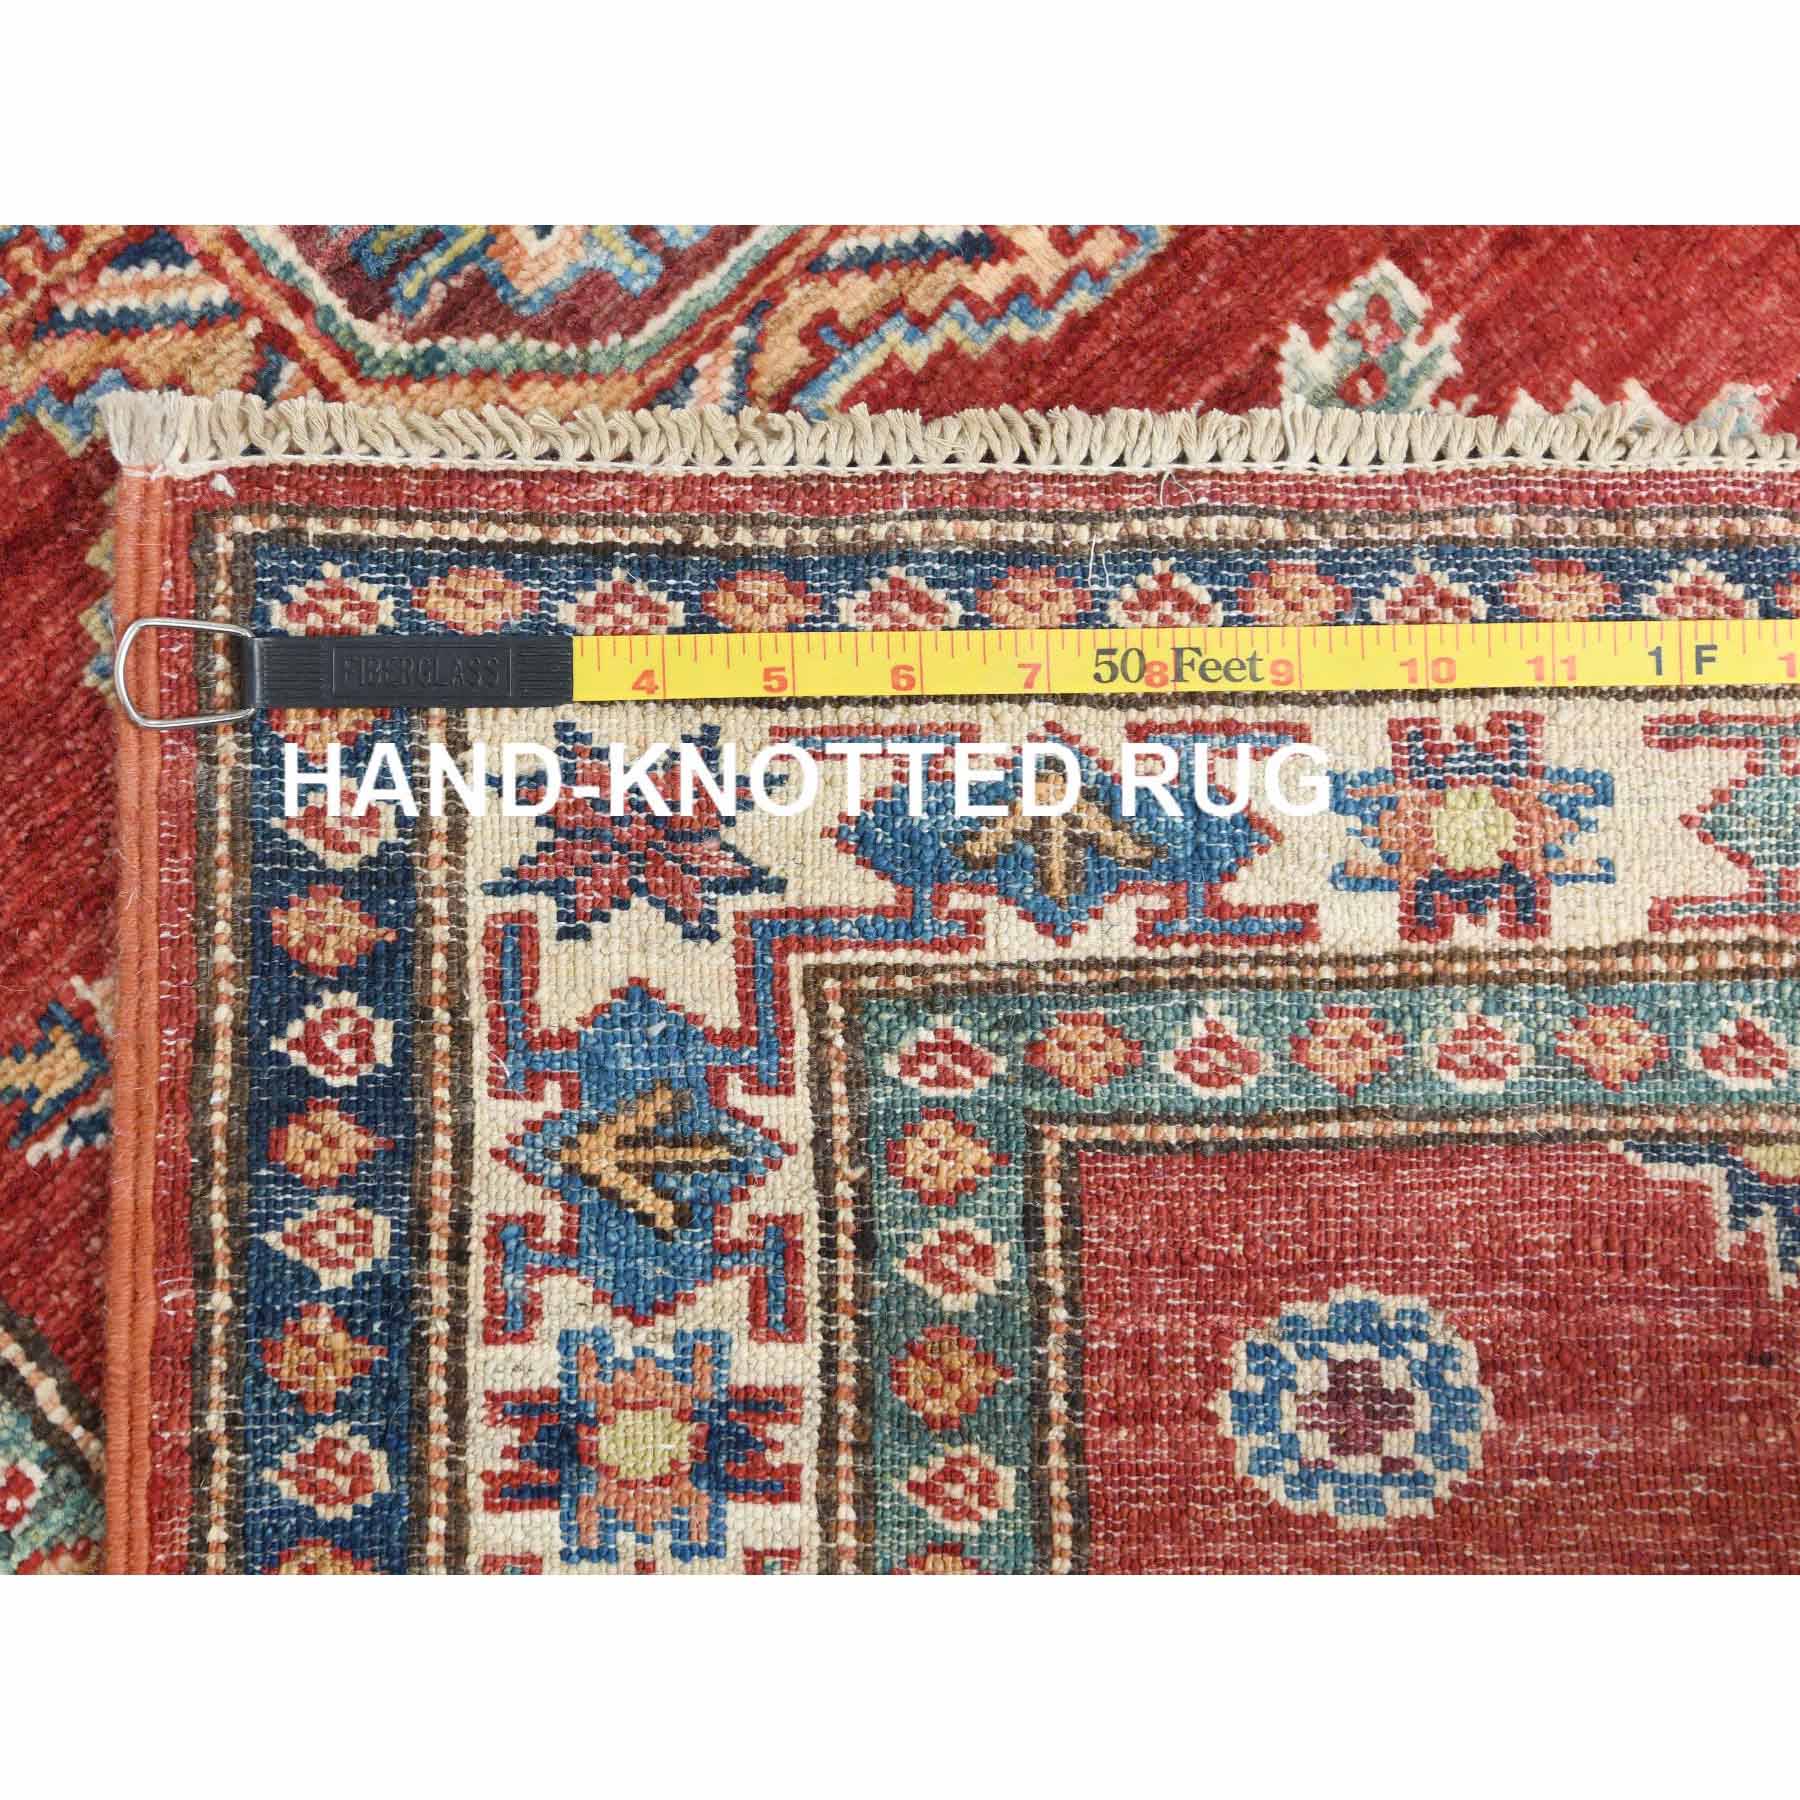 Kazak-Hand-Knotted-Rug-414515